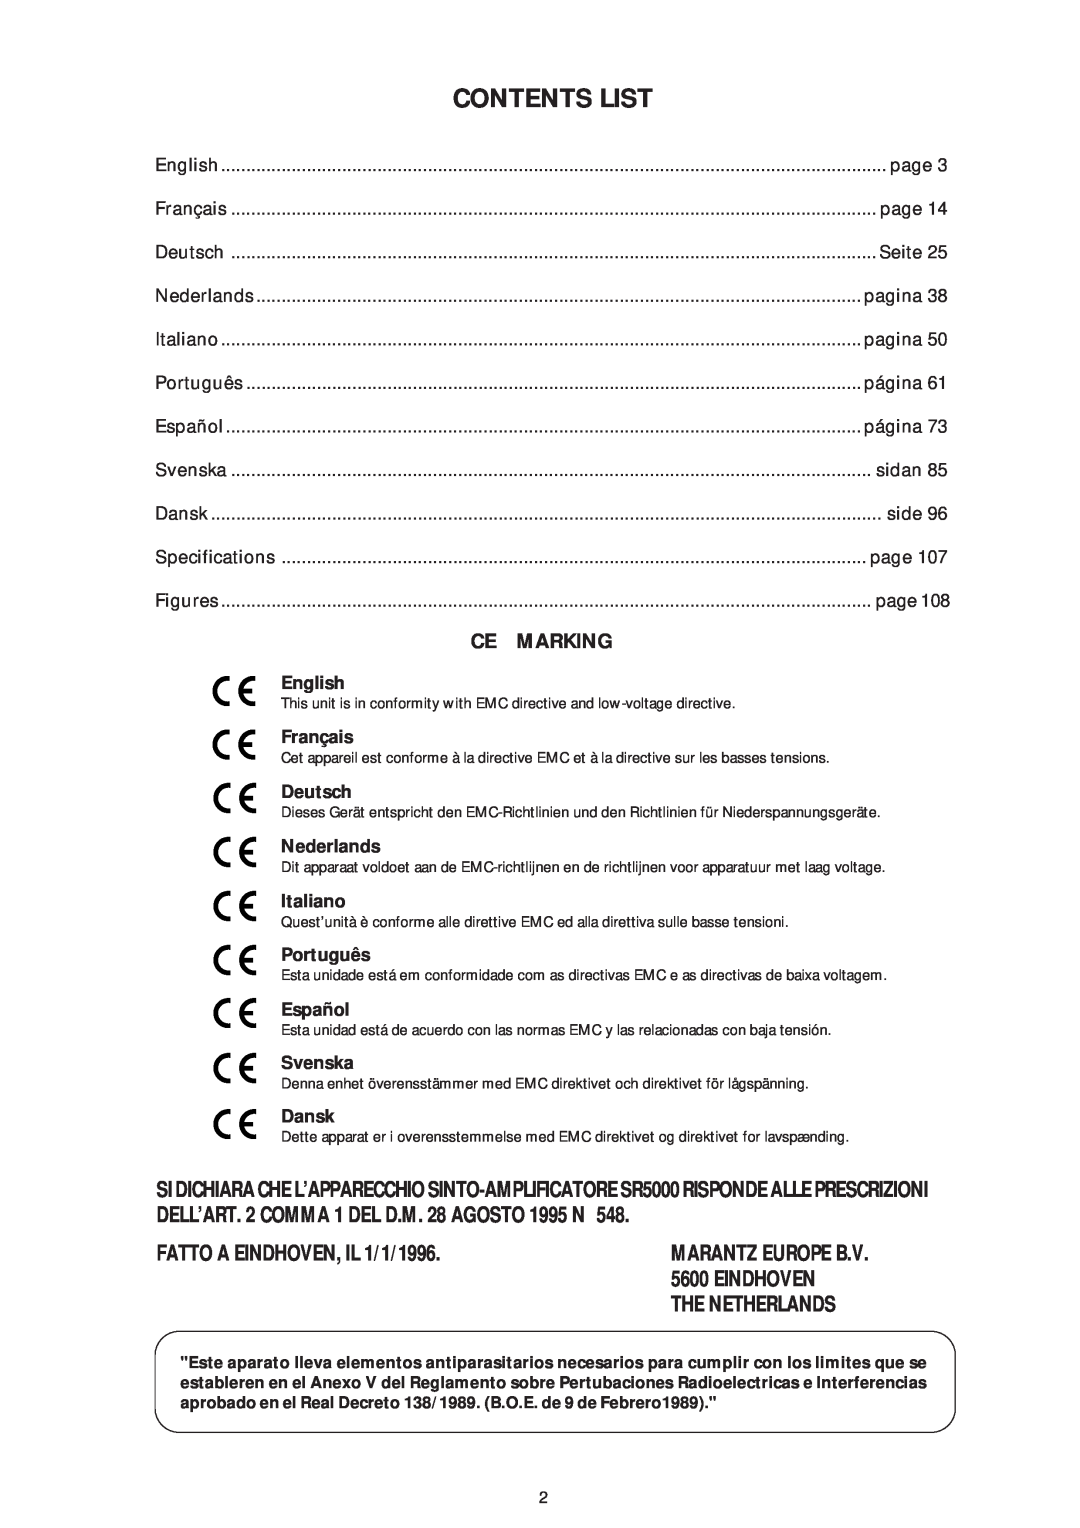 Marantz SR5000 manual Contents List, FATTO A EINDHOVEN, IL 1/1/1996, Eindhoven, Marking, The Netherlands 